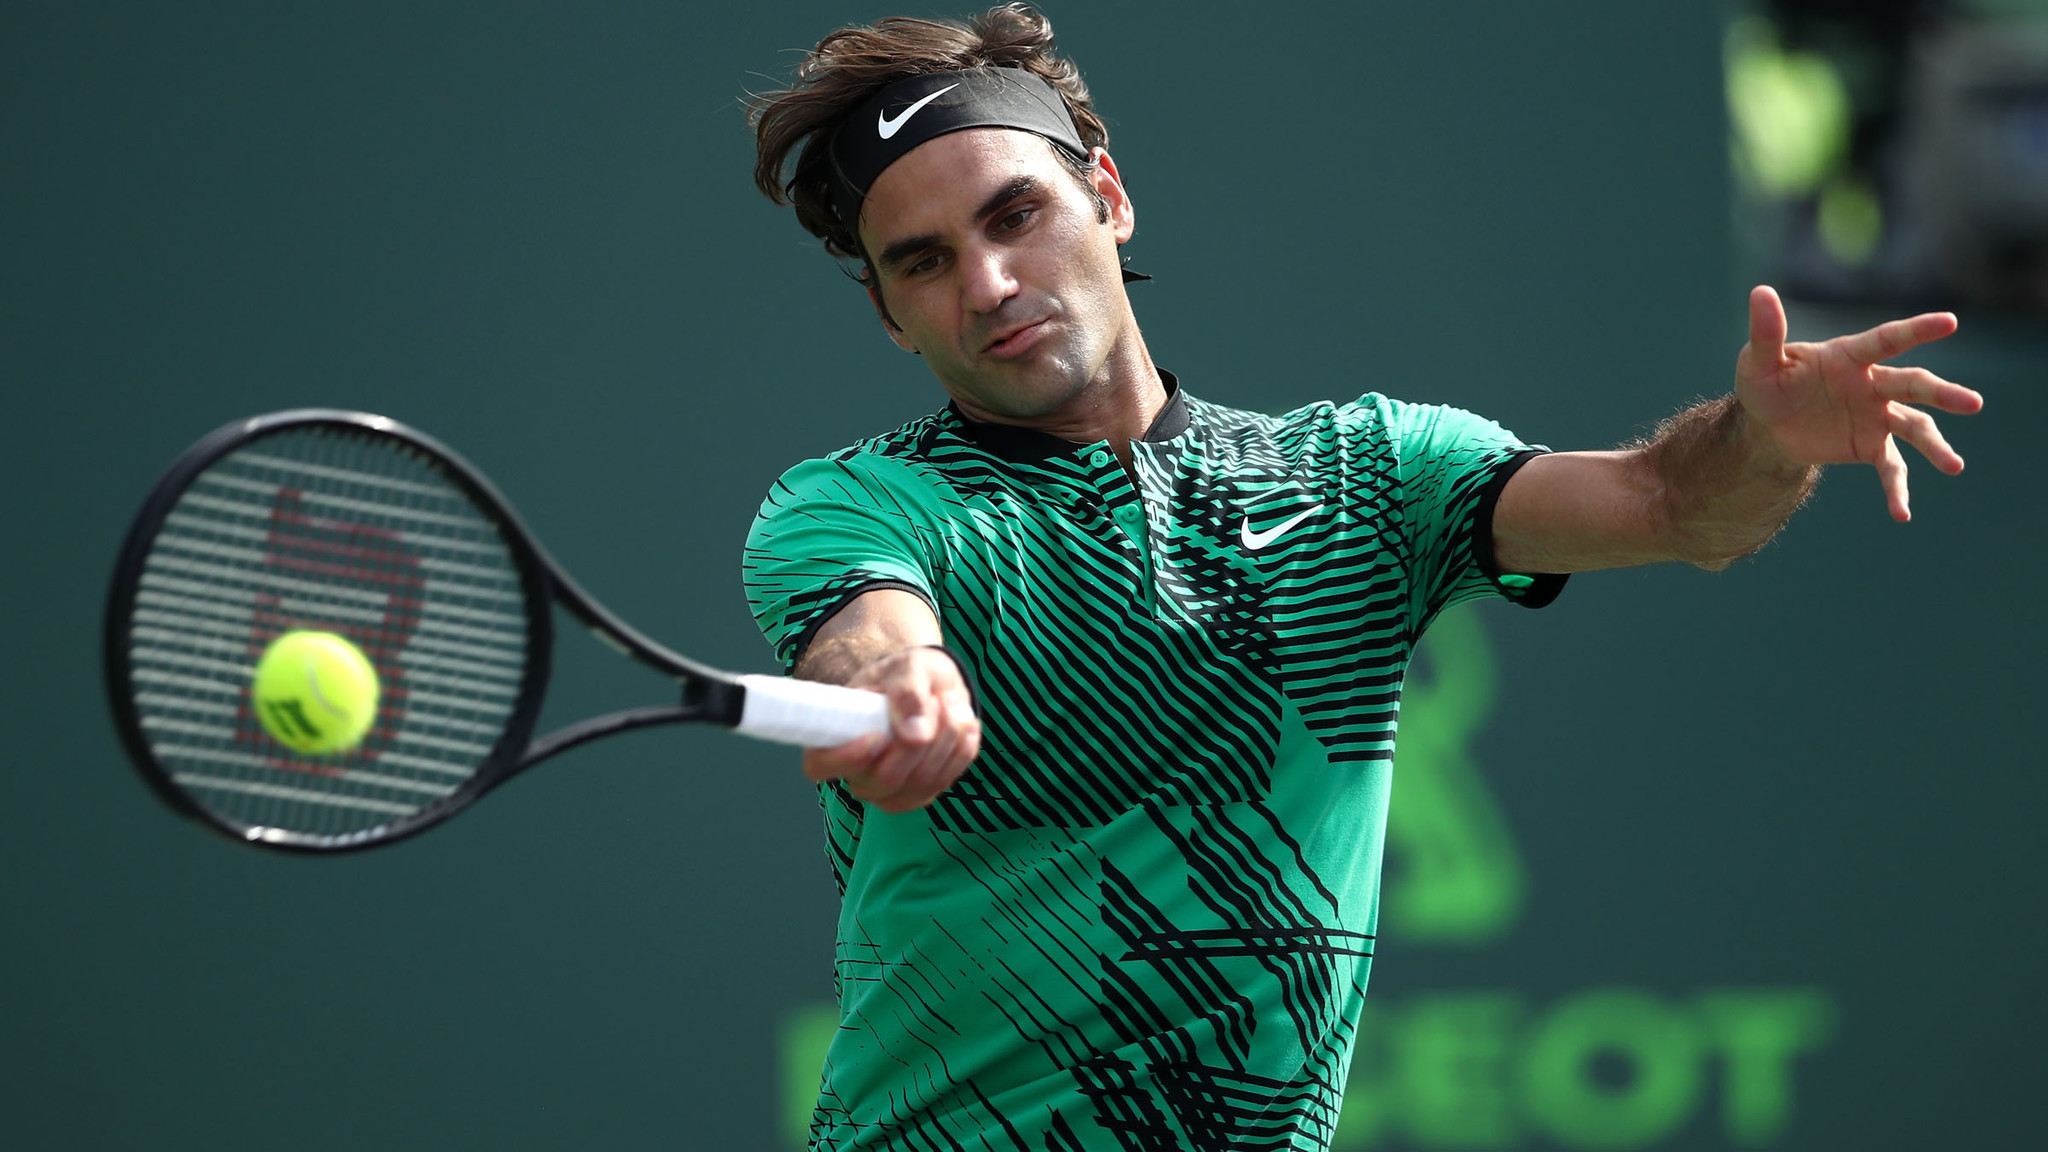 Tennis: Roger Federer, Caroline Wozniacki reach semifinals at Miami Open - LA Times2048 x 1152